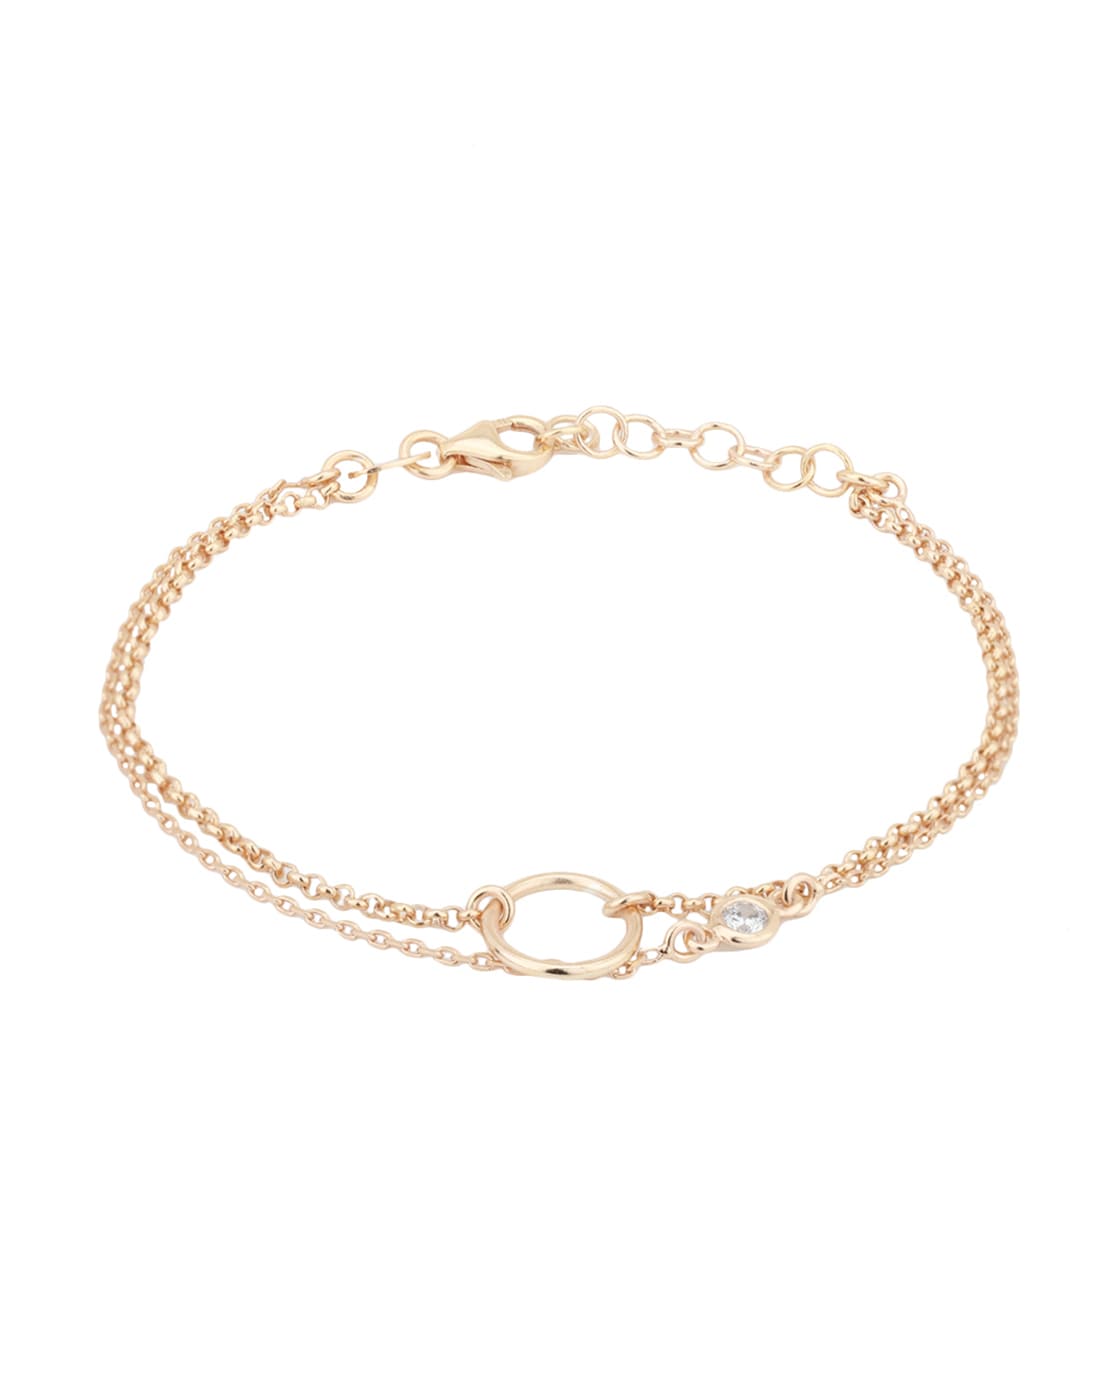 Fine Beaded Chain Bracelet in 18k Gold Vermeil on Sterling Silver |  Jewellery by Monica Vinader